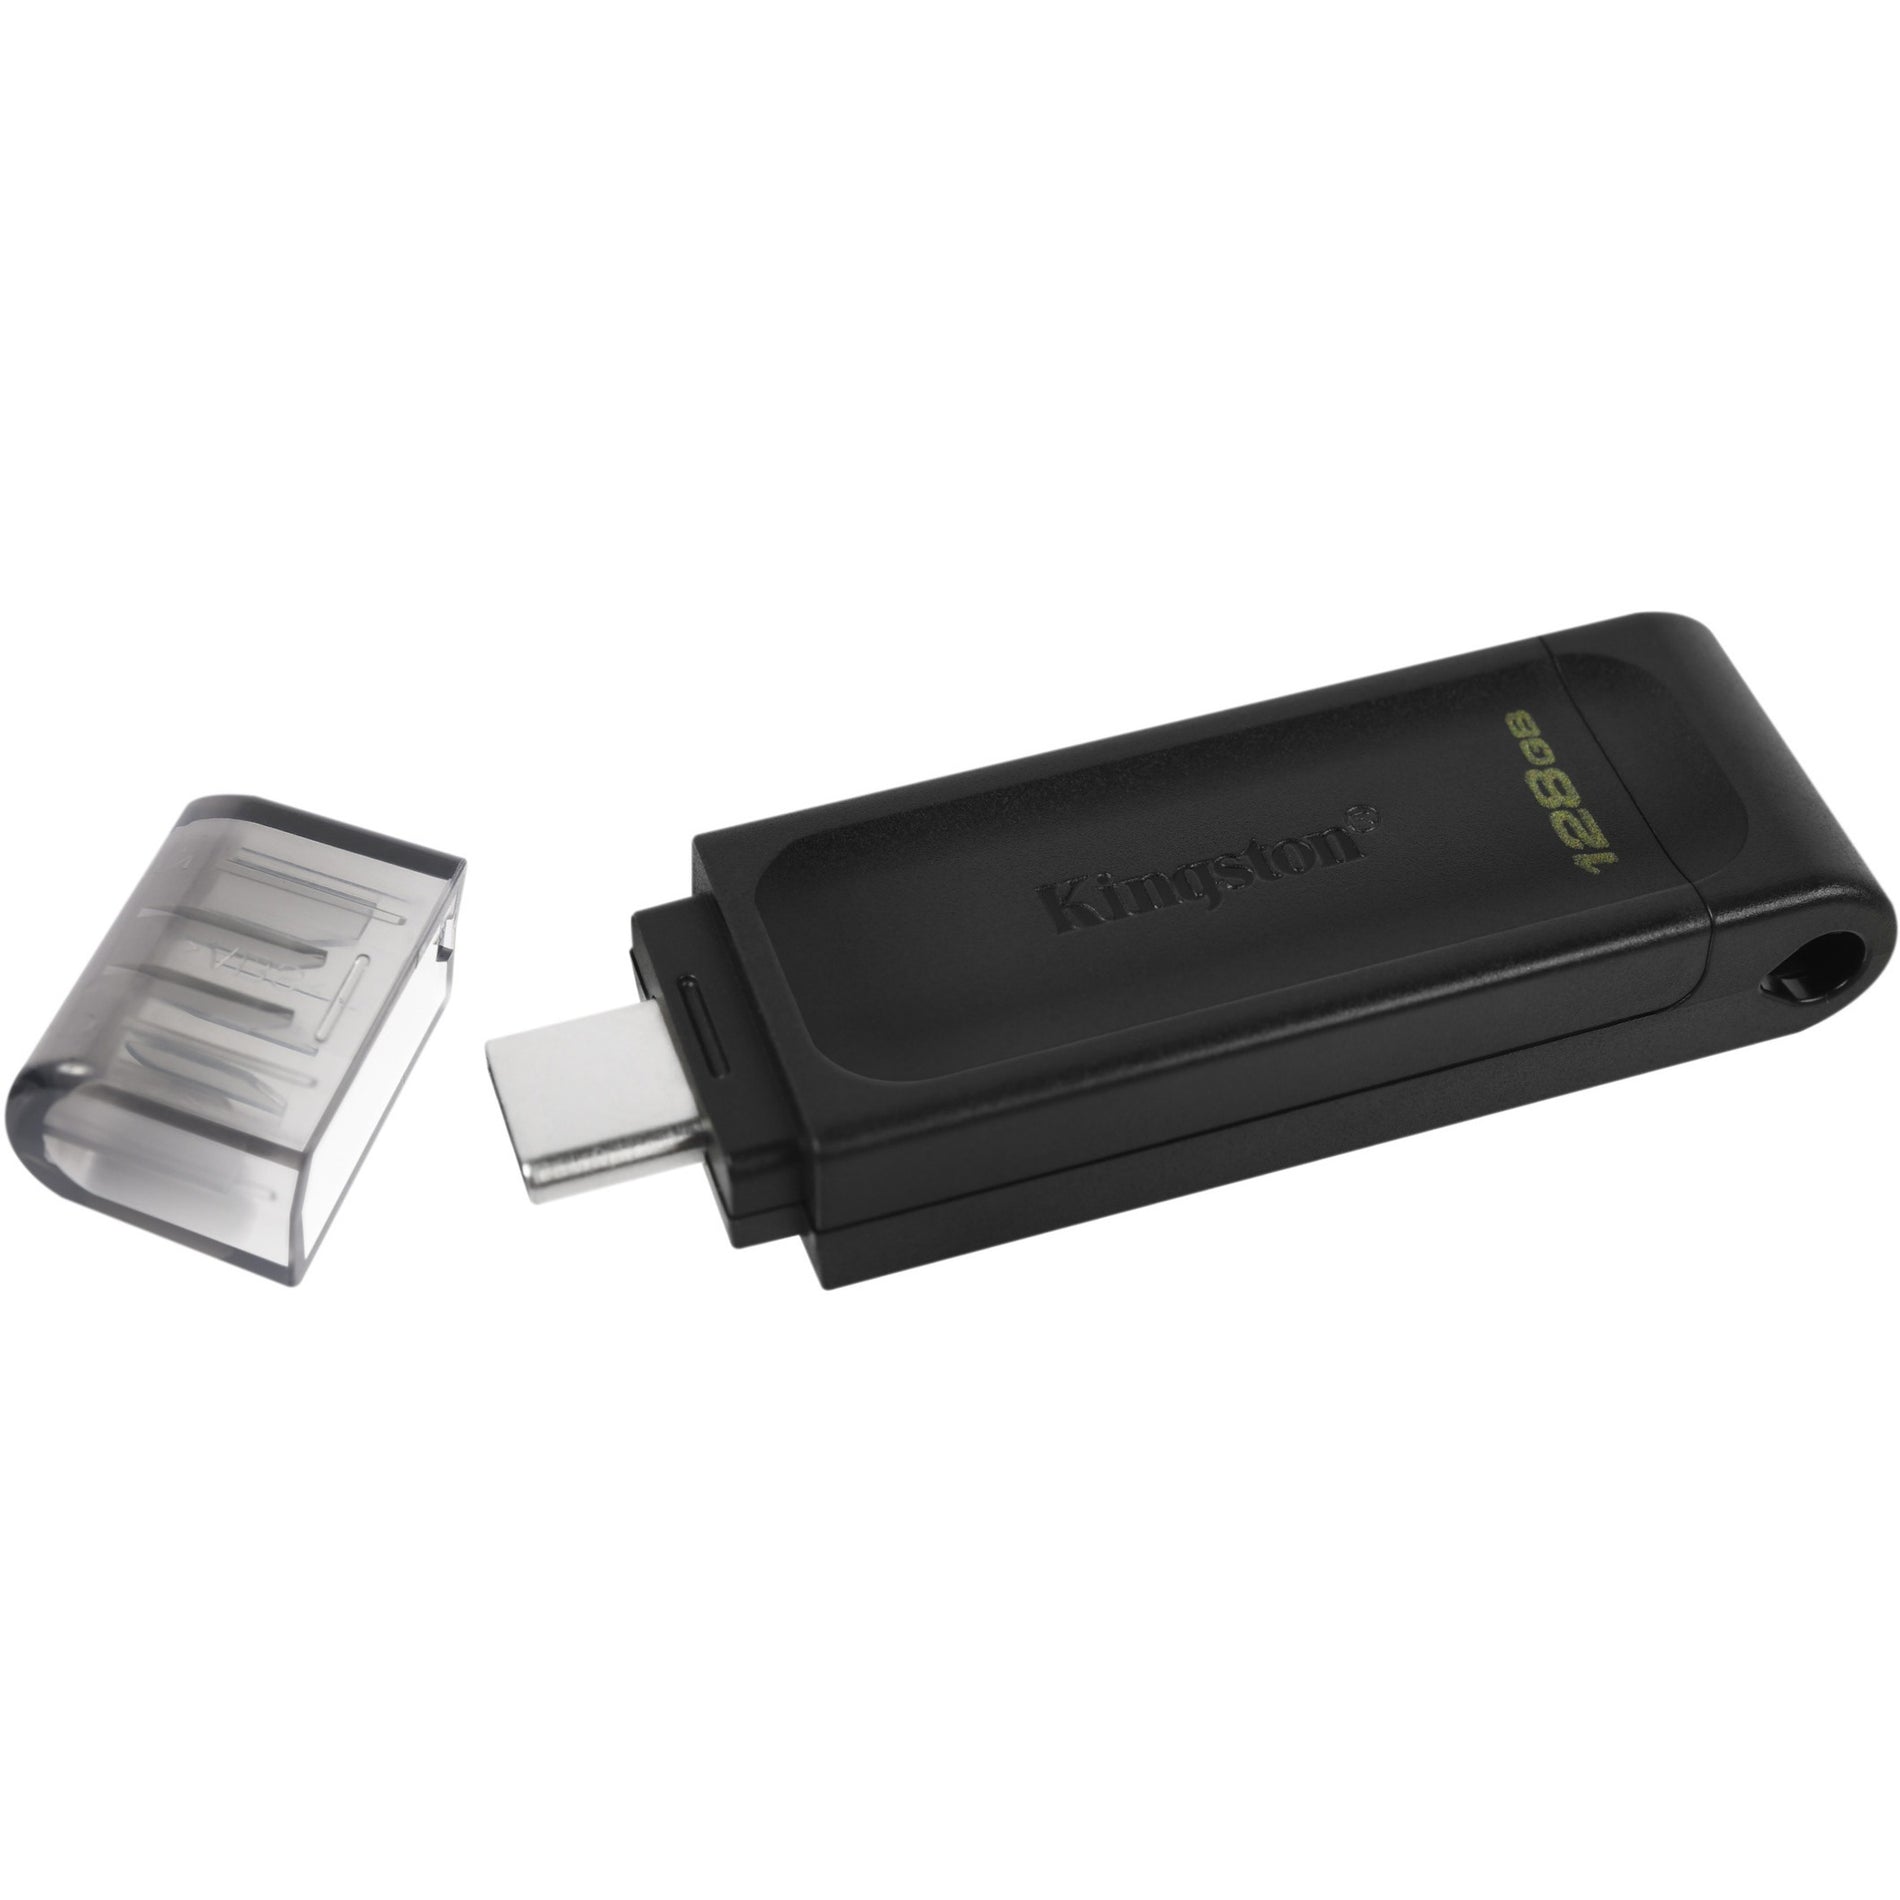 Kingston DT70/128GB DataTraveler 70 USB-C Flash Drive, Lightweight, Portable, 128GB Storage